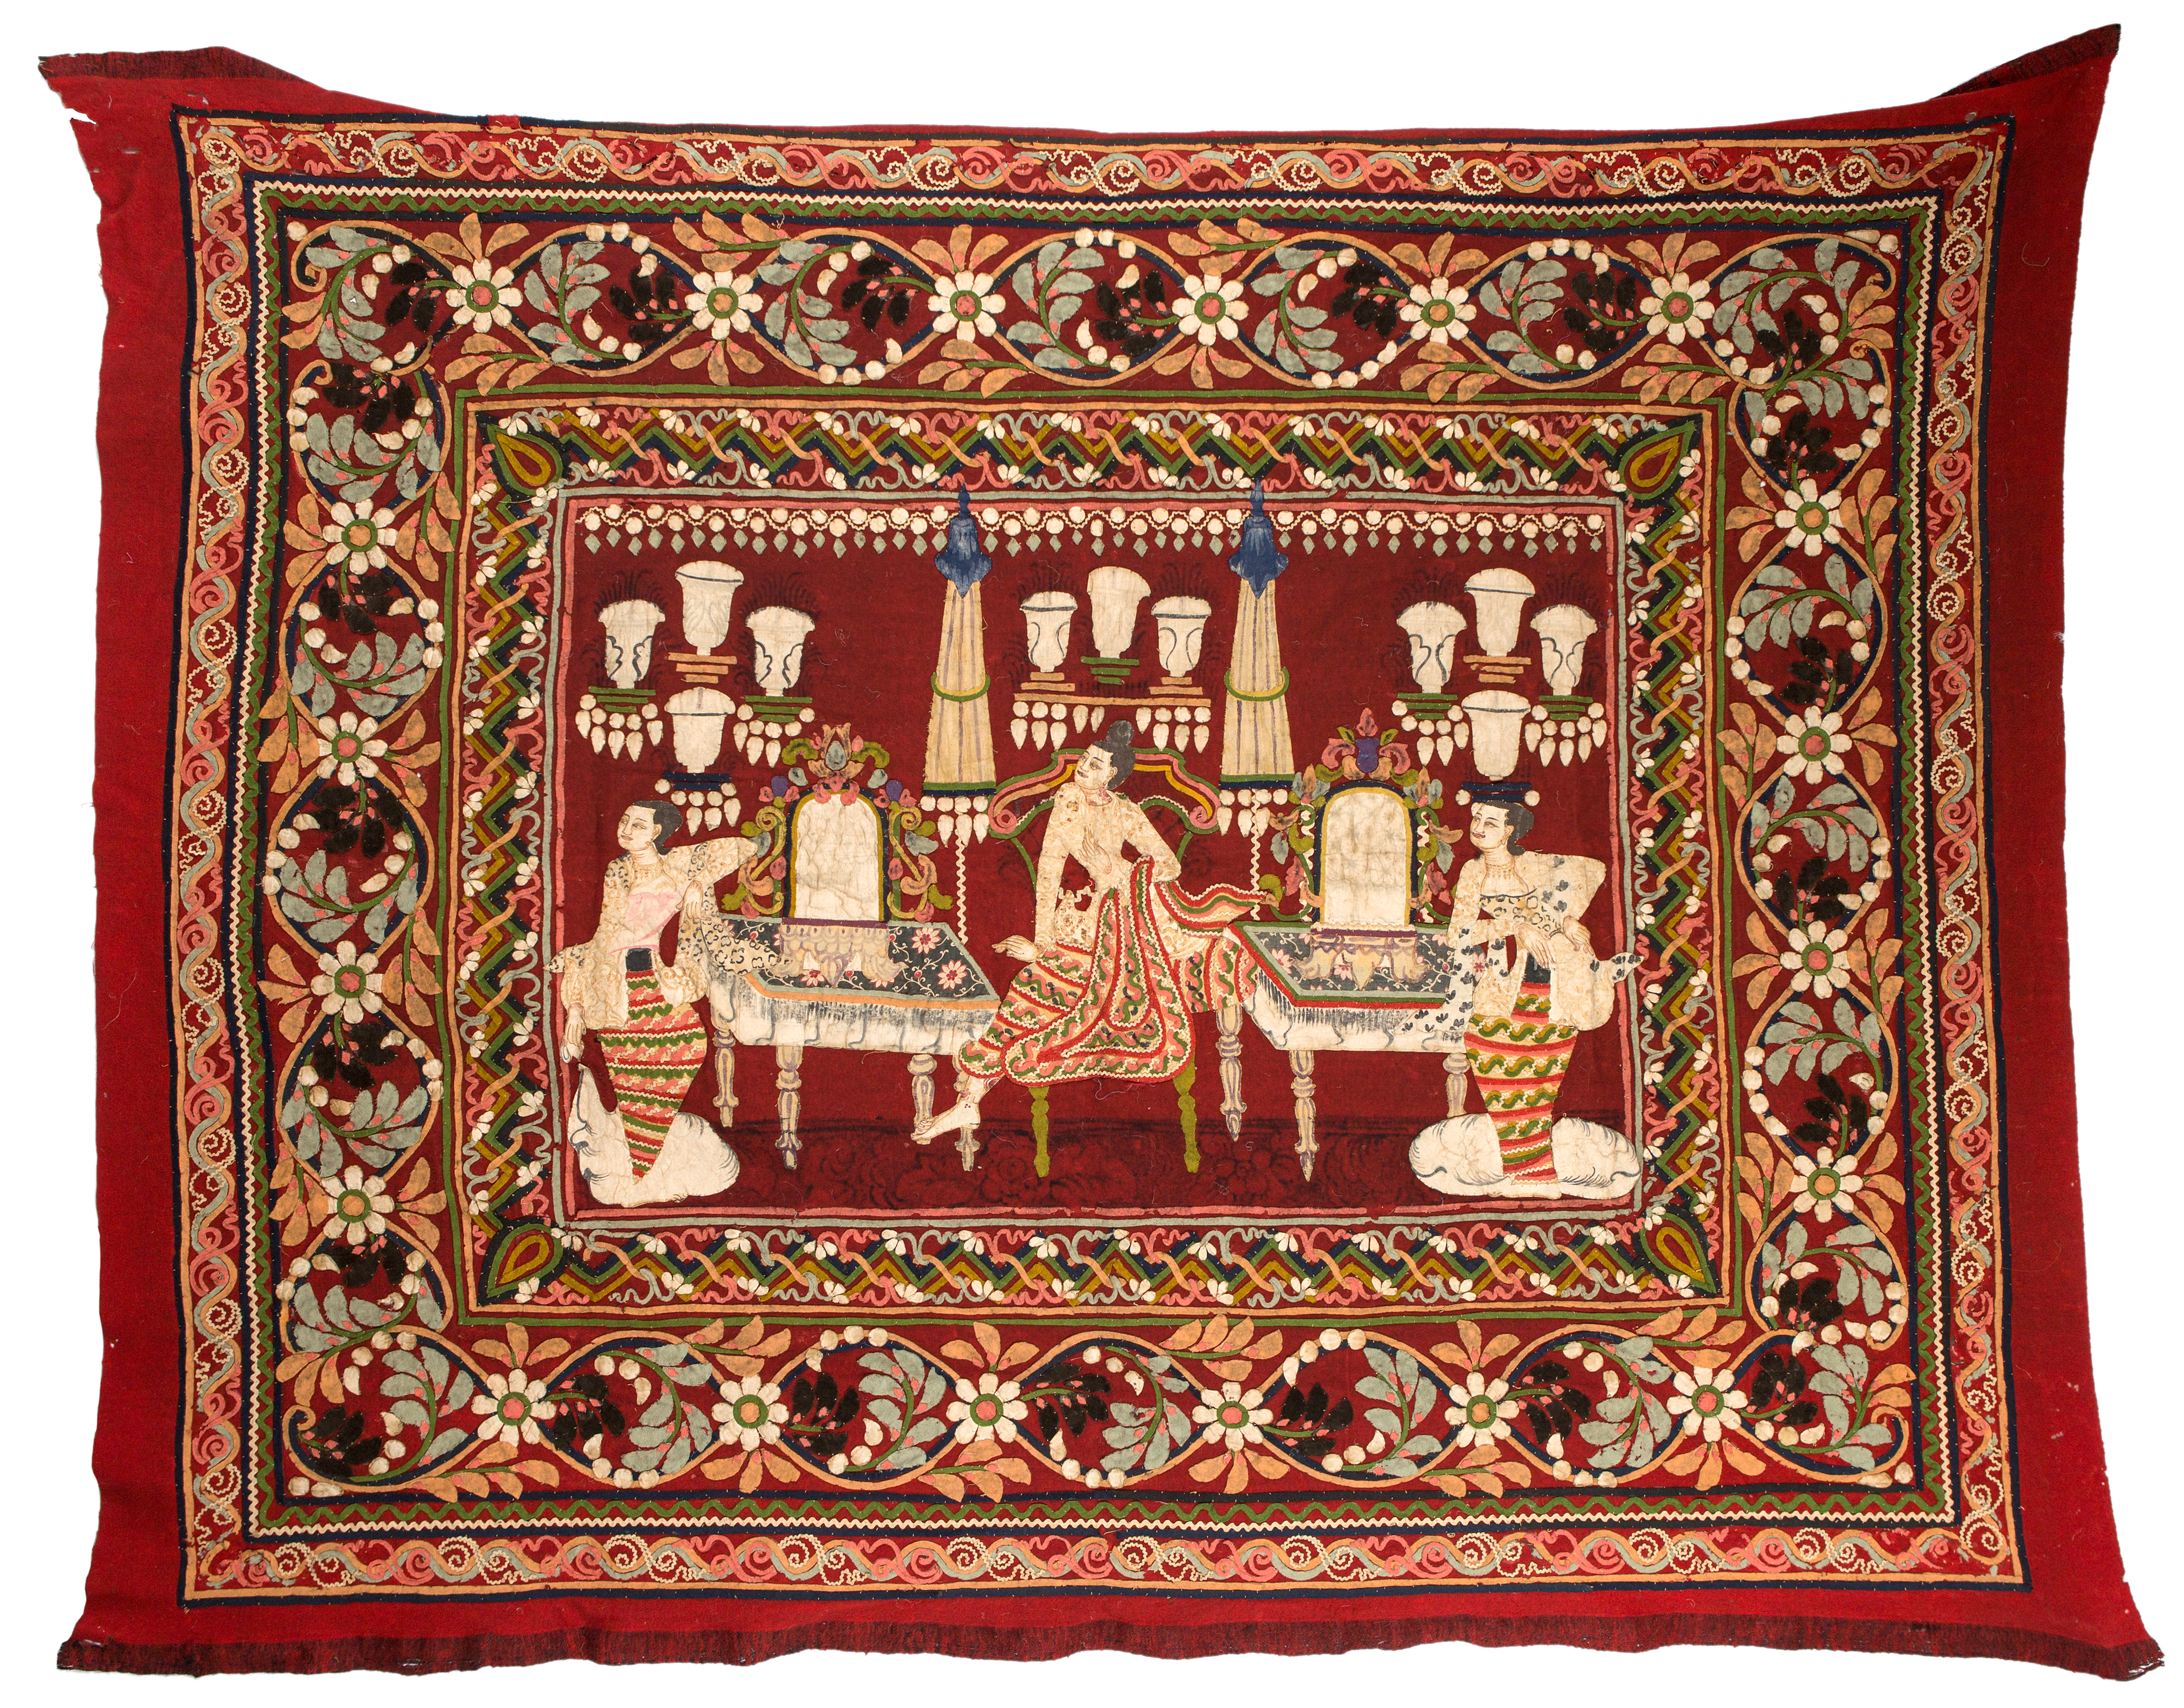 A rare Burmese embroidered textile panel (kalaga)